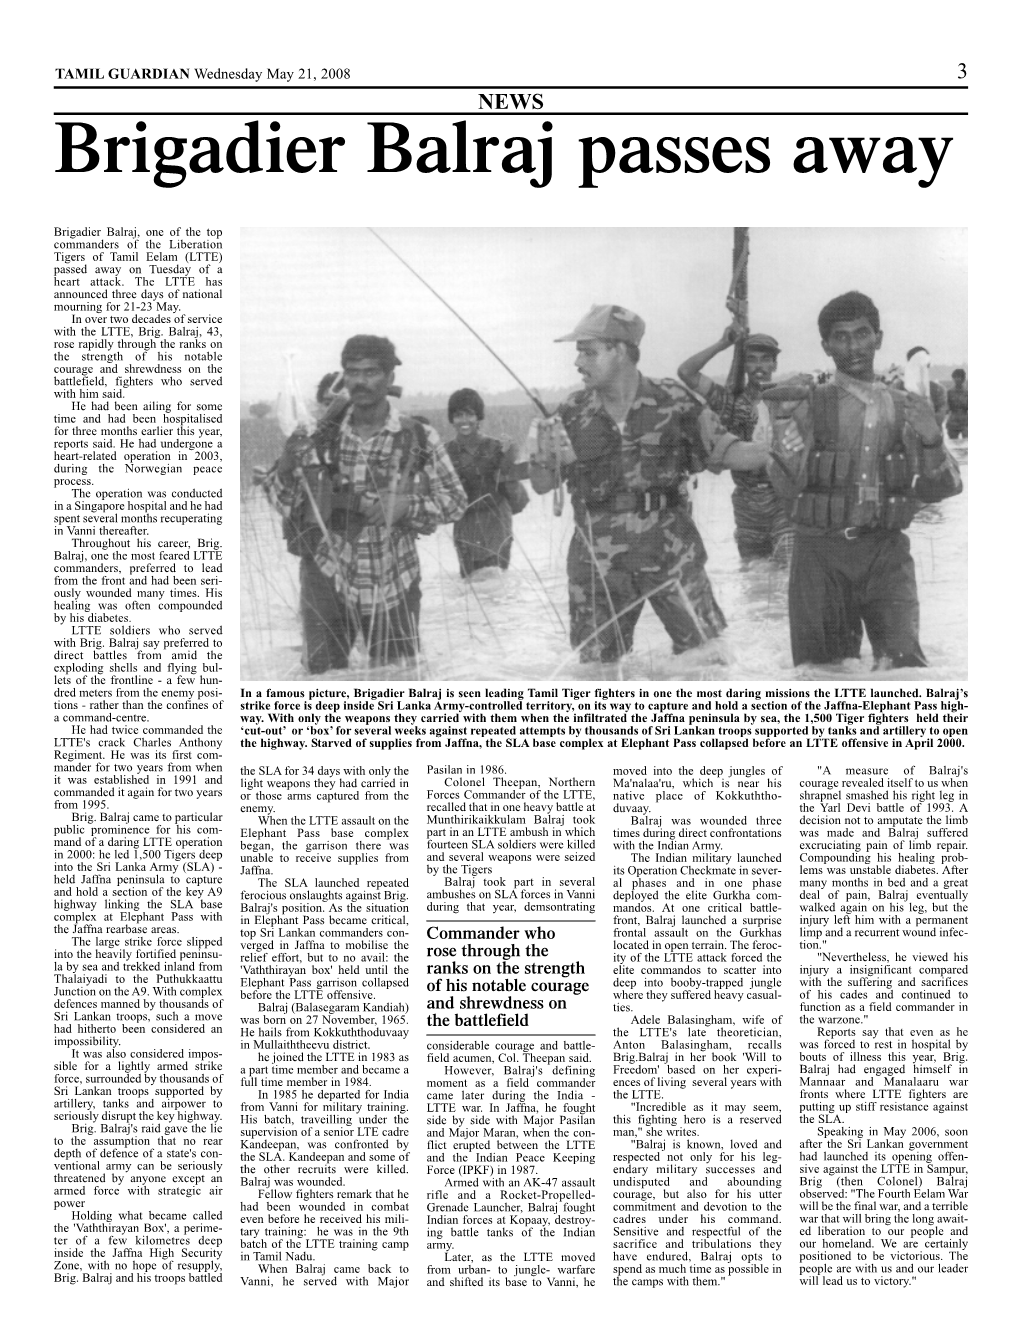 Brigadier Balraj Passes Away